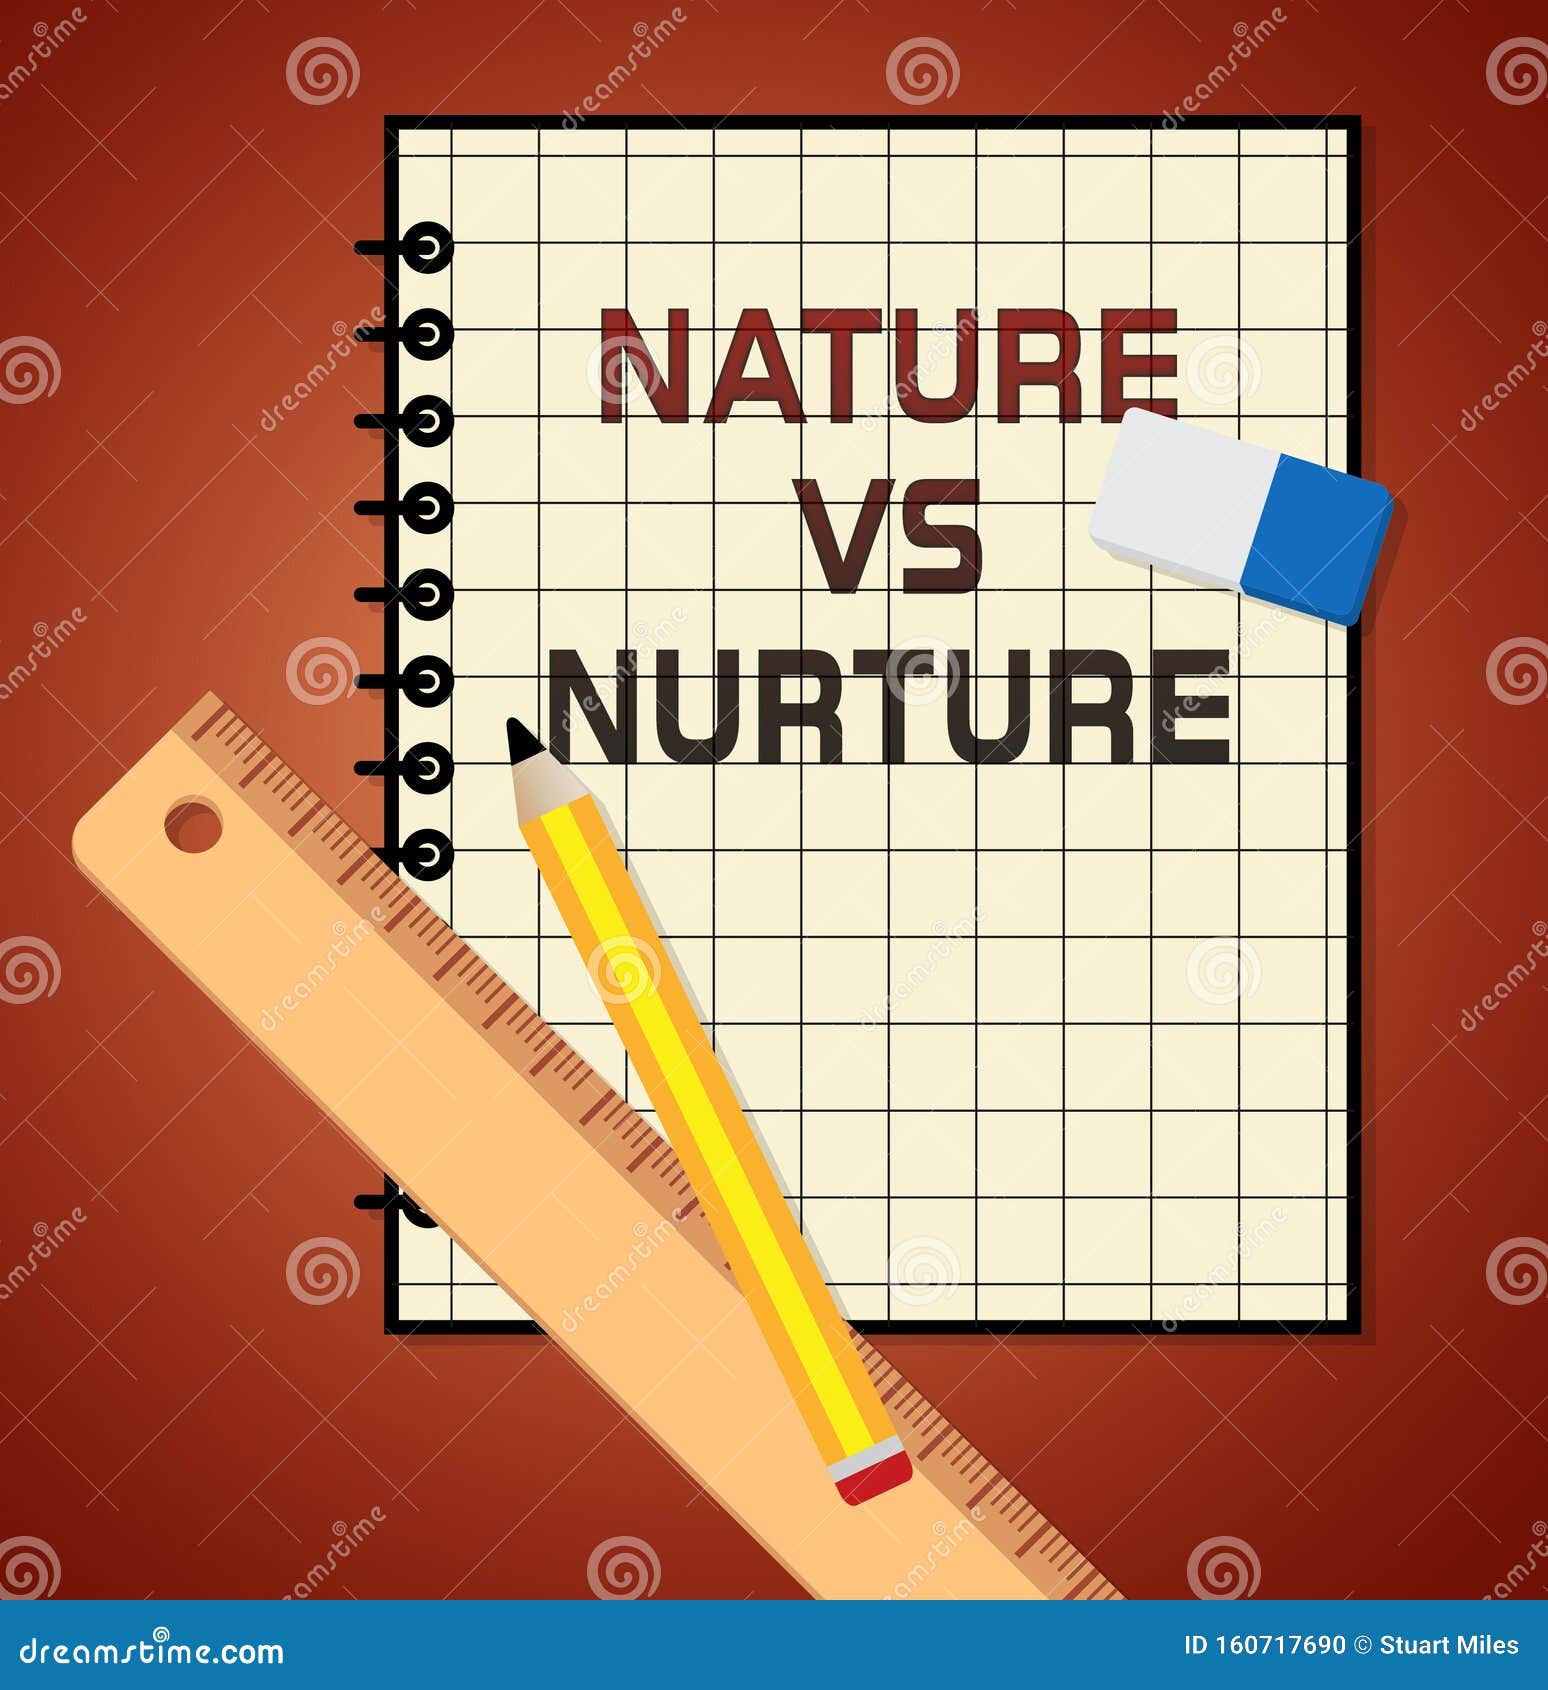 nature vs nurture intelligence